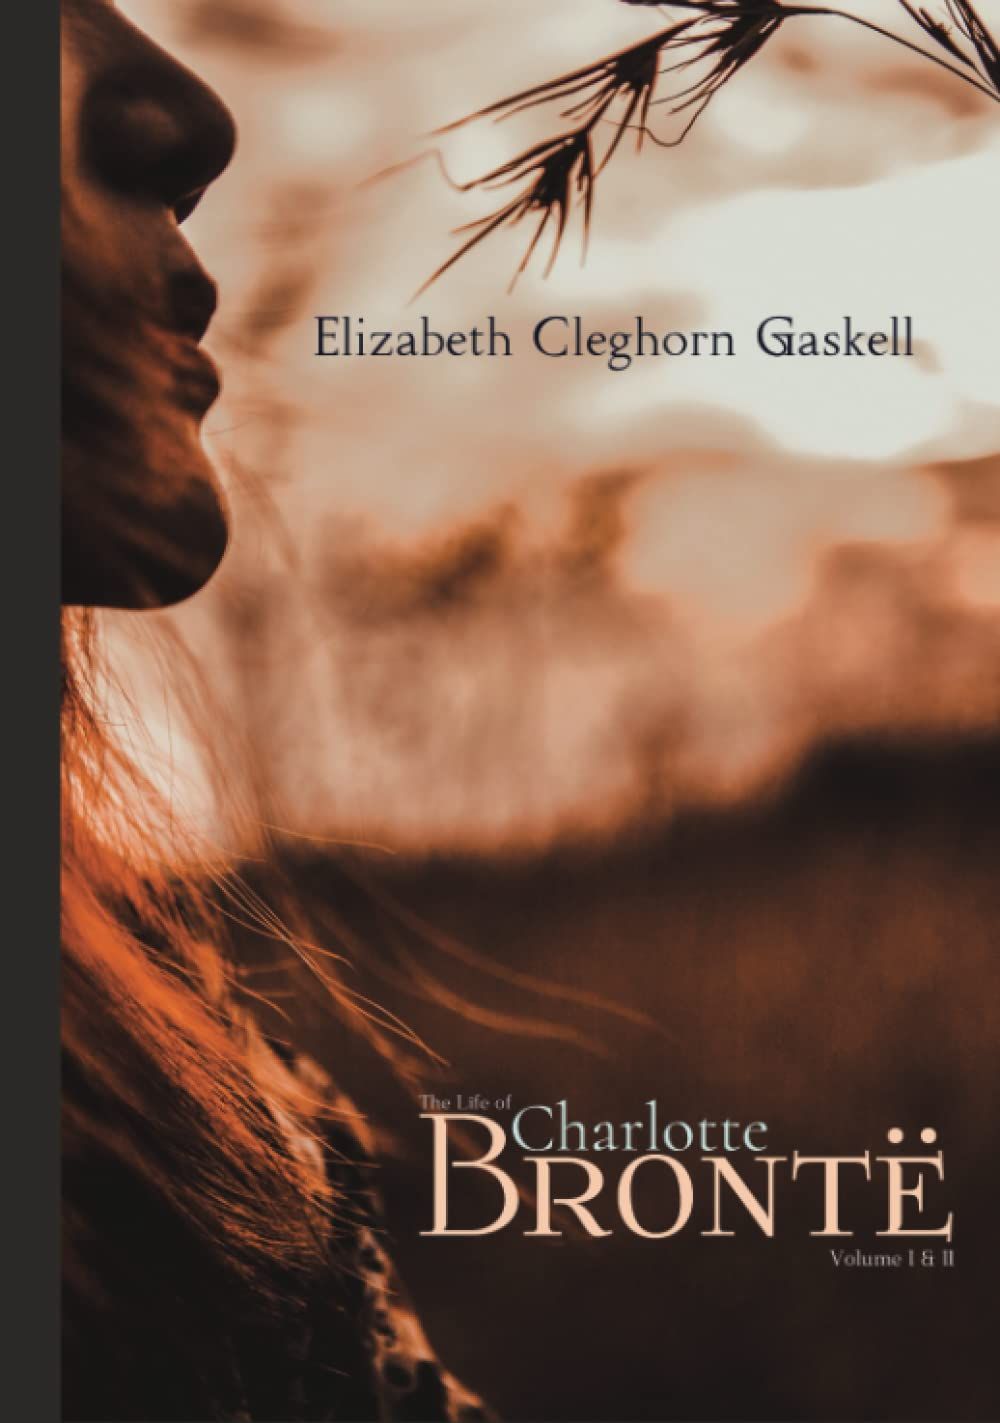 The life of Charlotte Brontë Vol.I & II